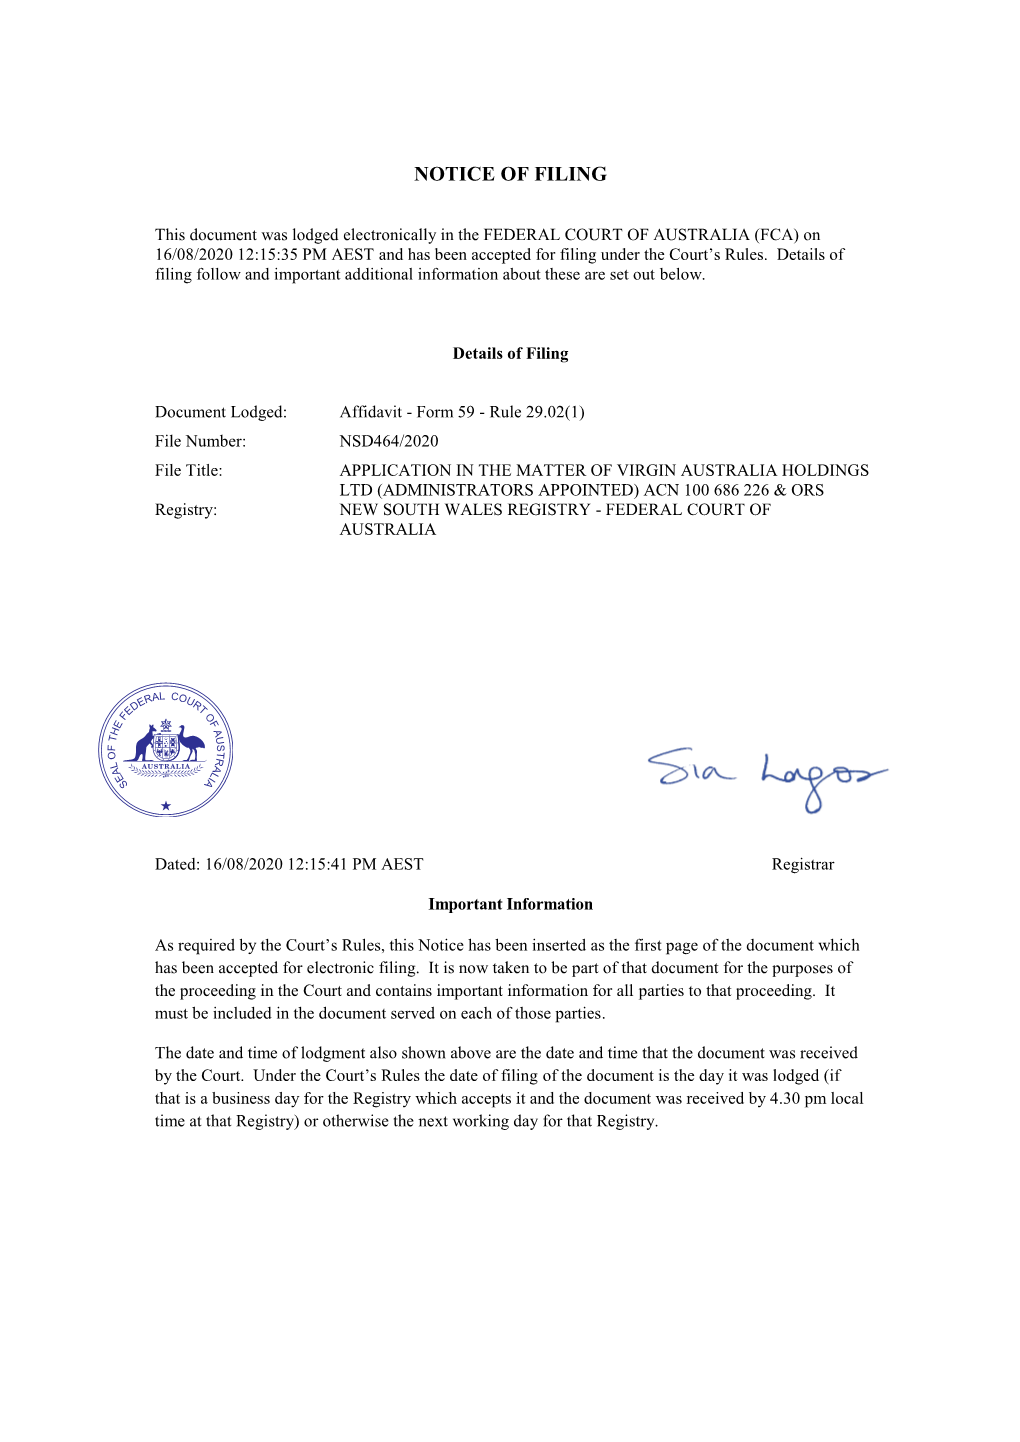 Affidavit of Cameron John Cheetham Affirmed on 16 4 1-11 1-5 August 2020